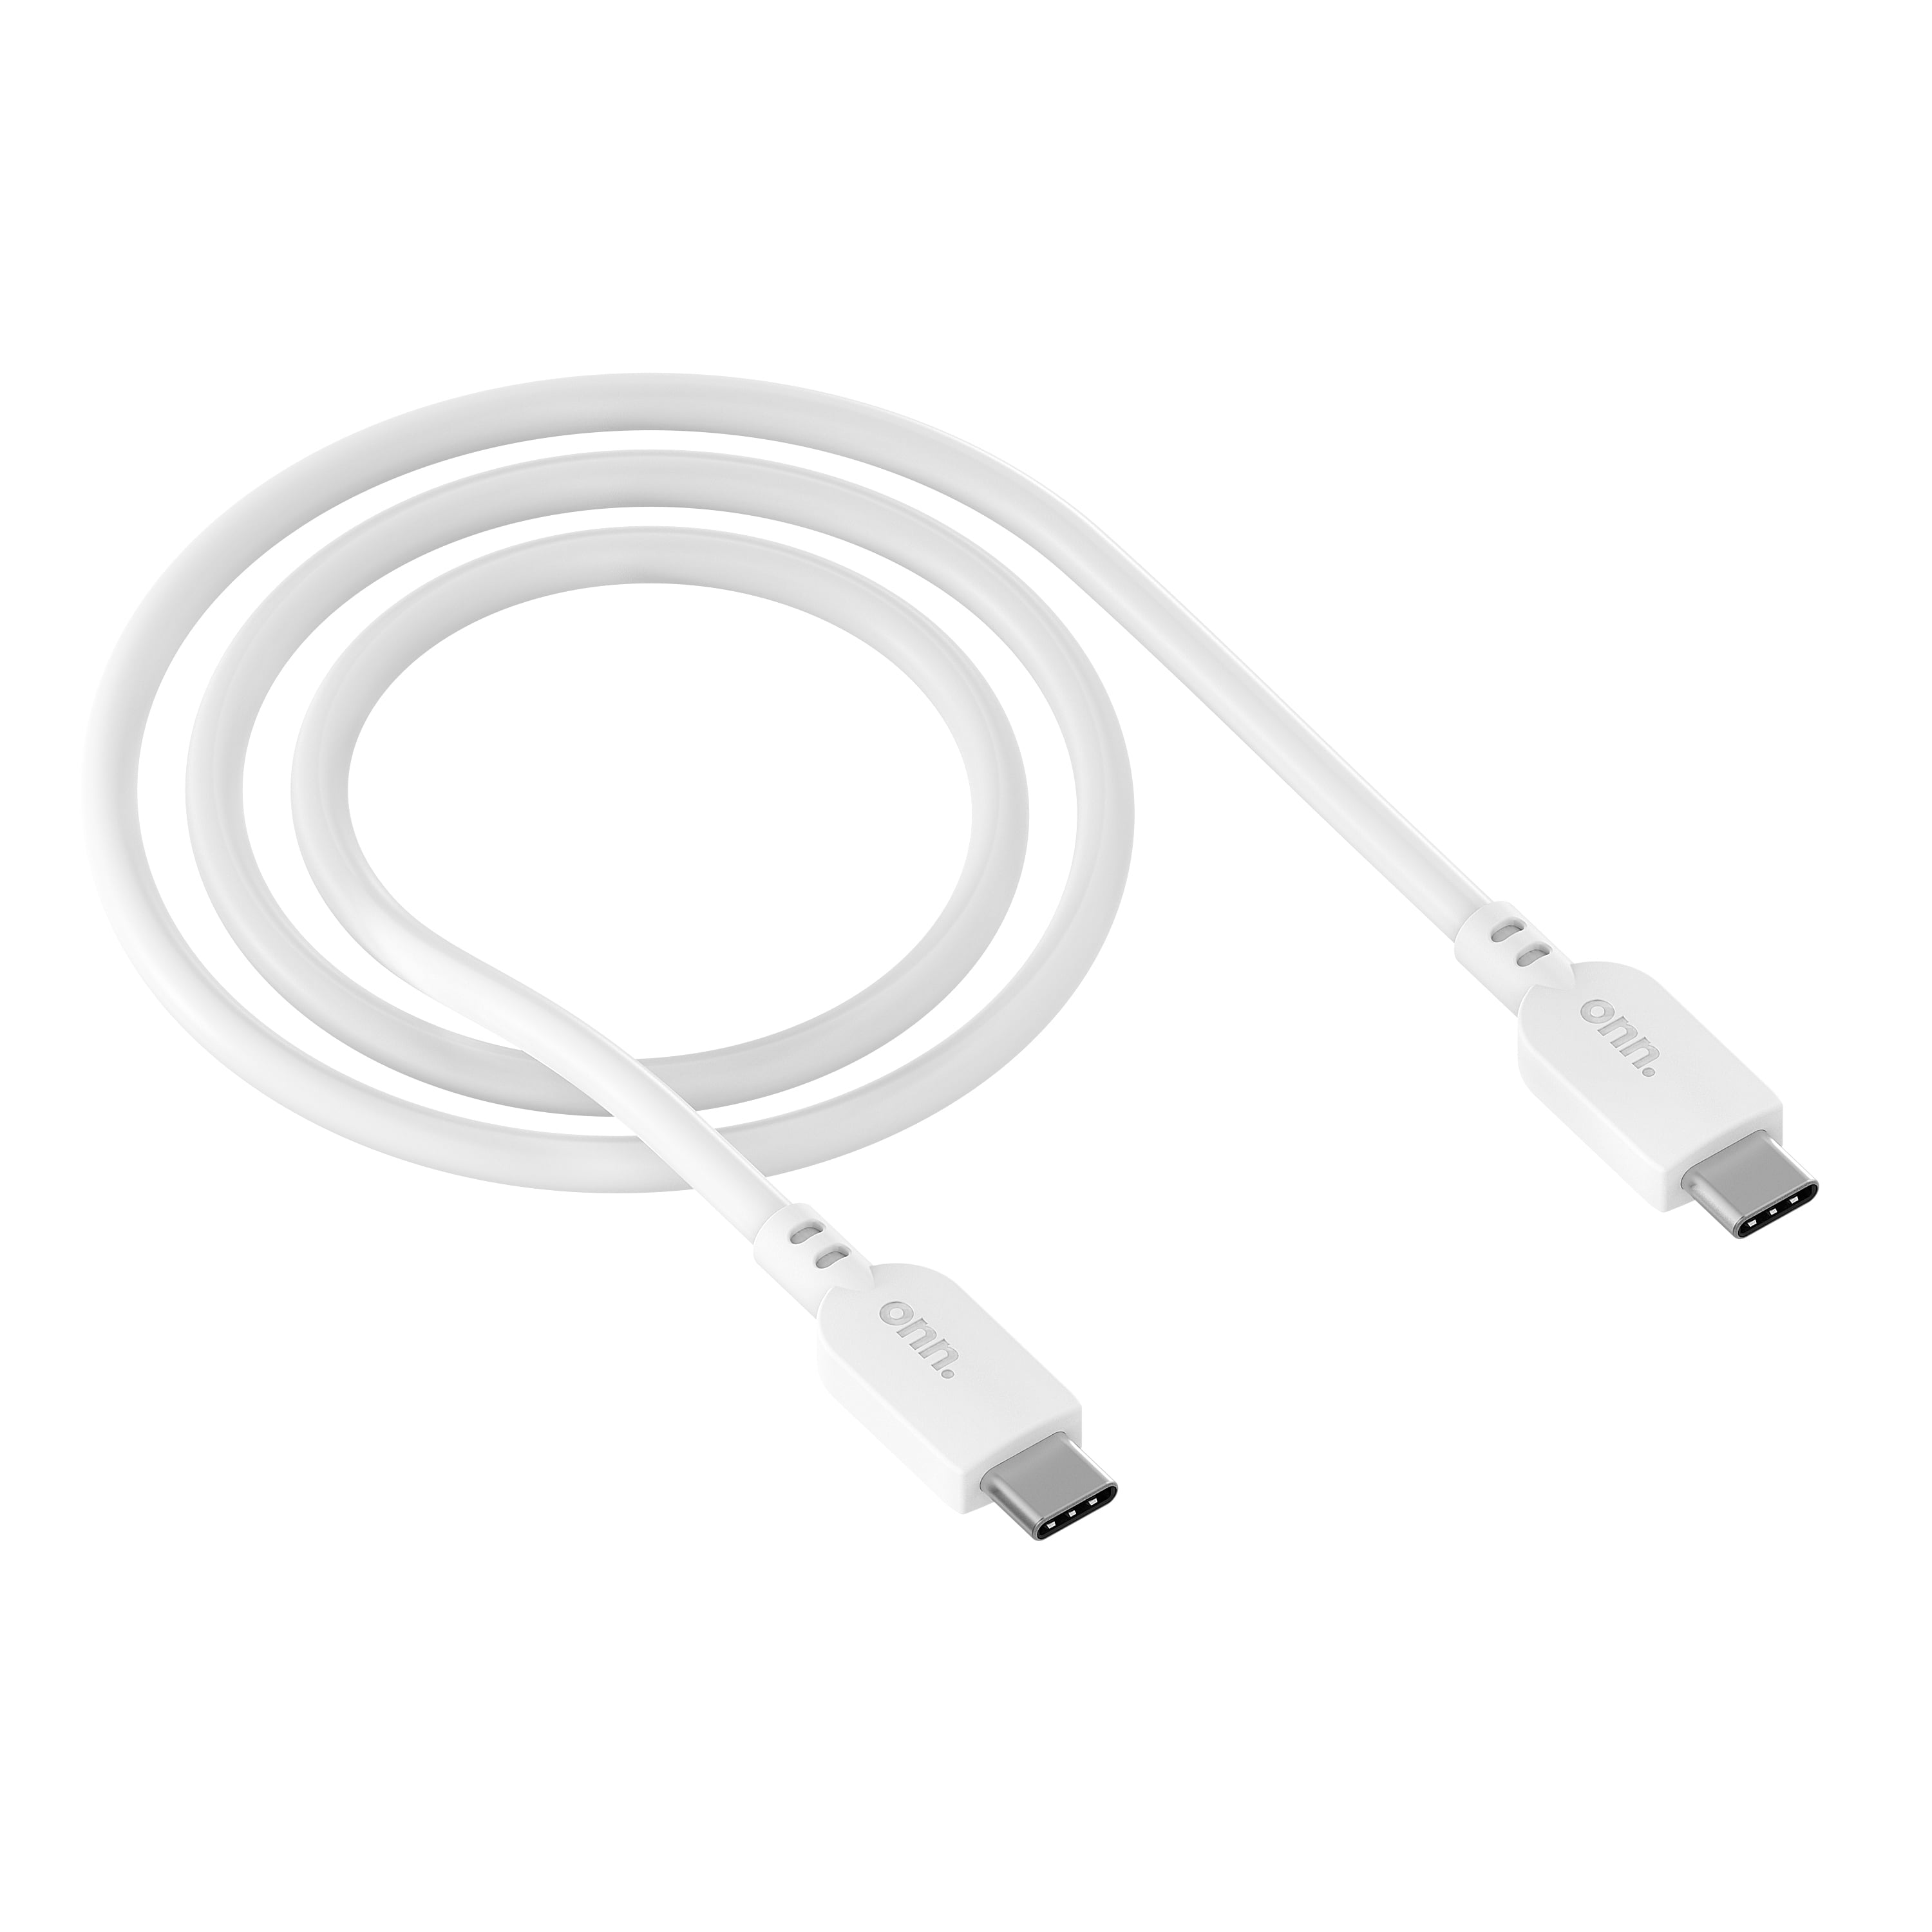 onn. 10' USB-C to USB-C Cable, White Walmart.com